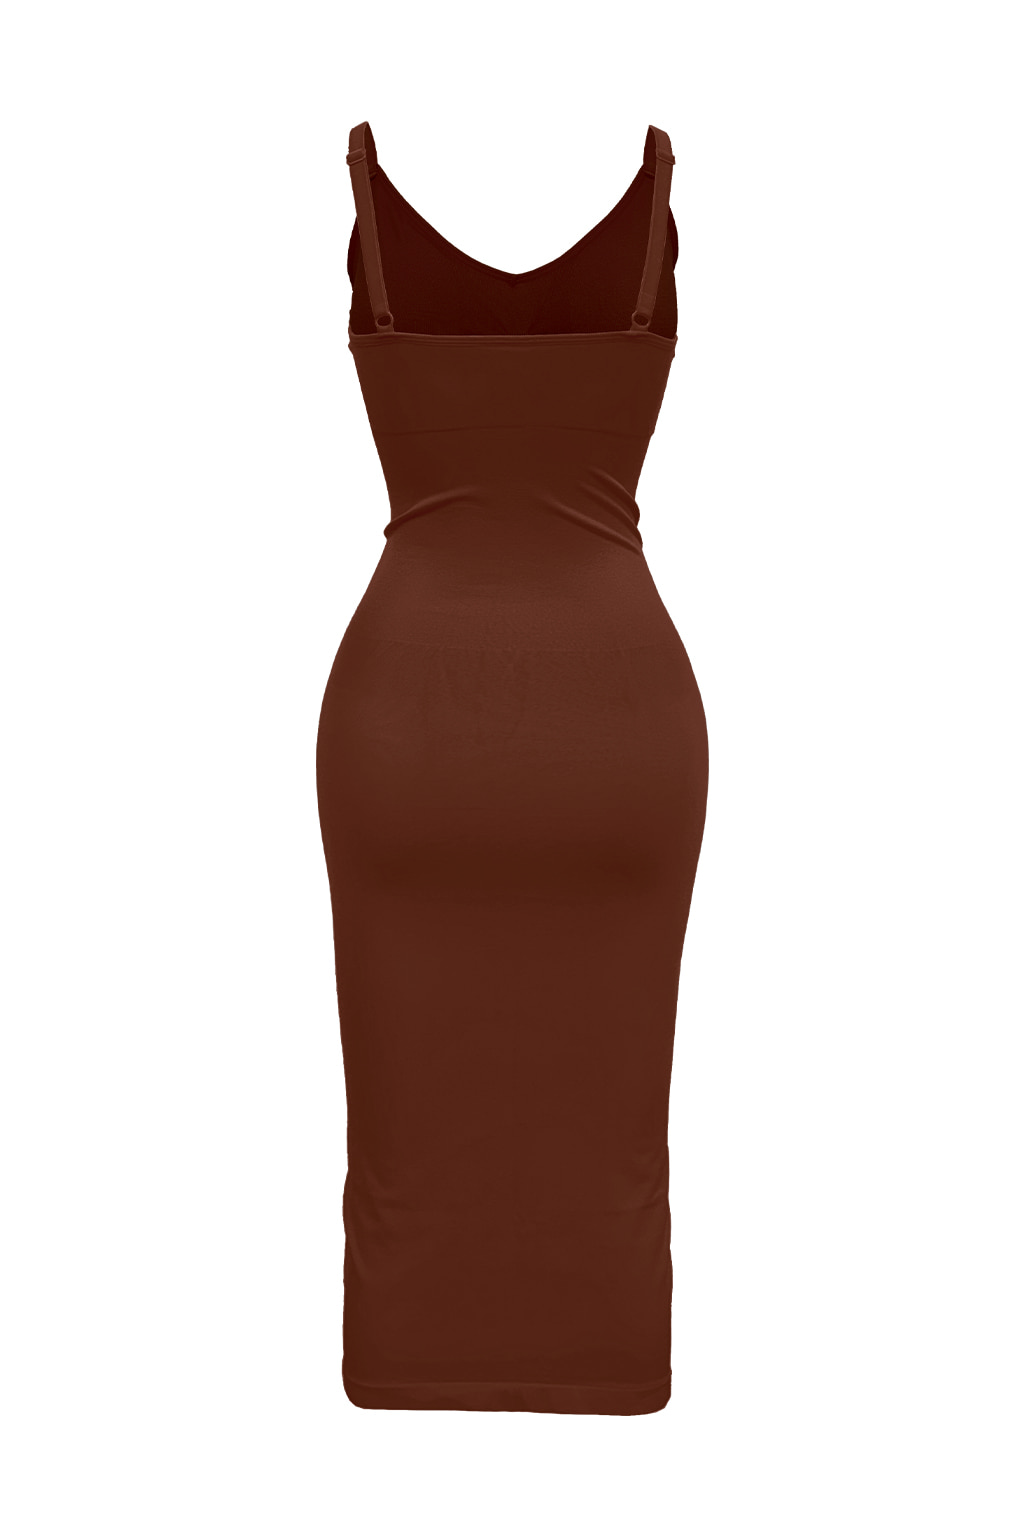 Mochi Glamour Deep V-Neck One-Piece Dress Chocolate Brown